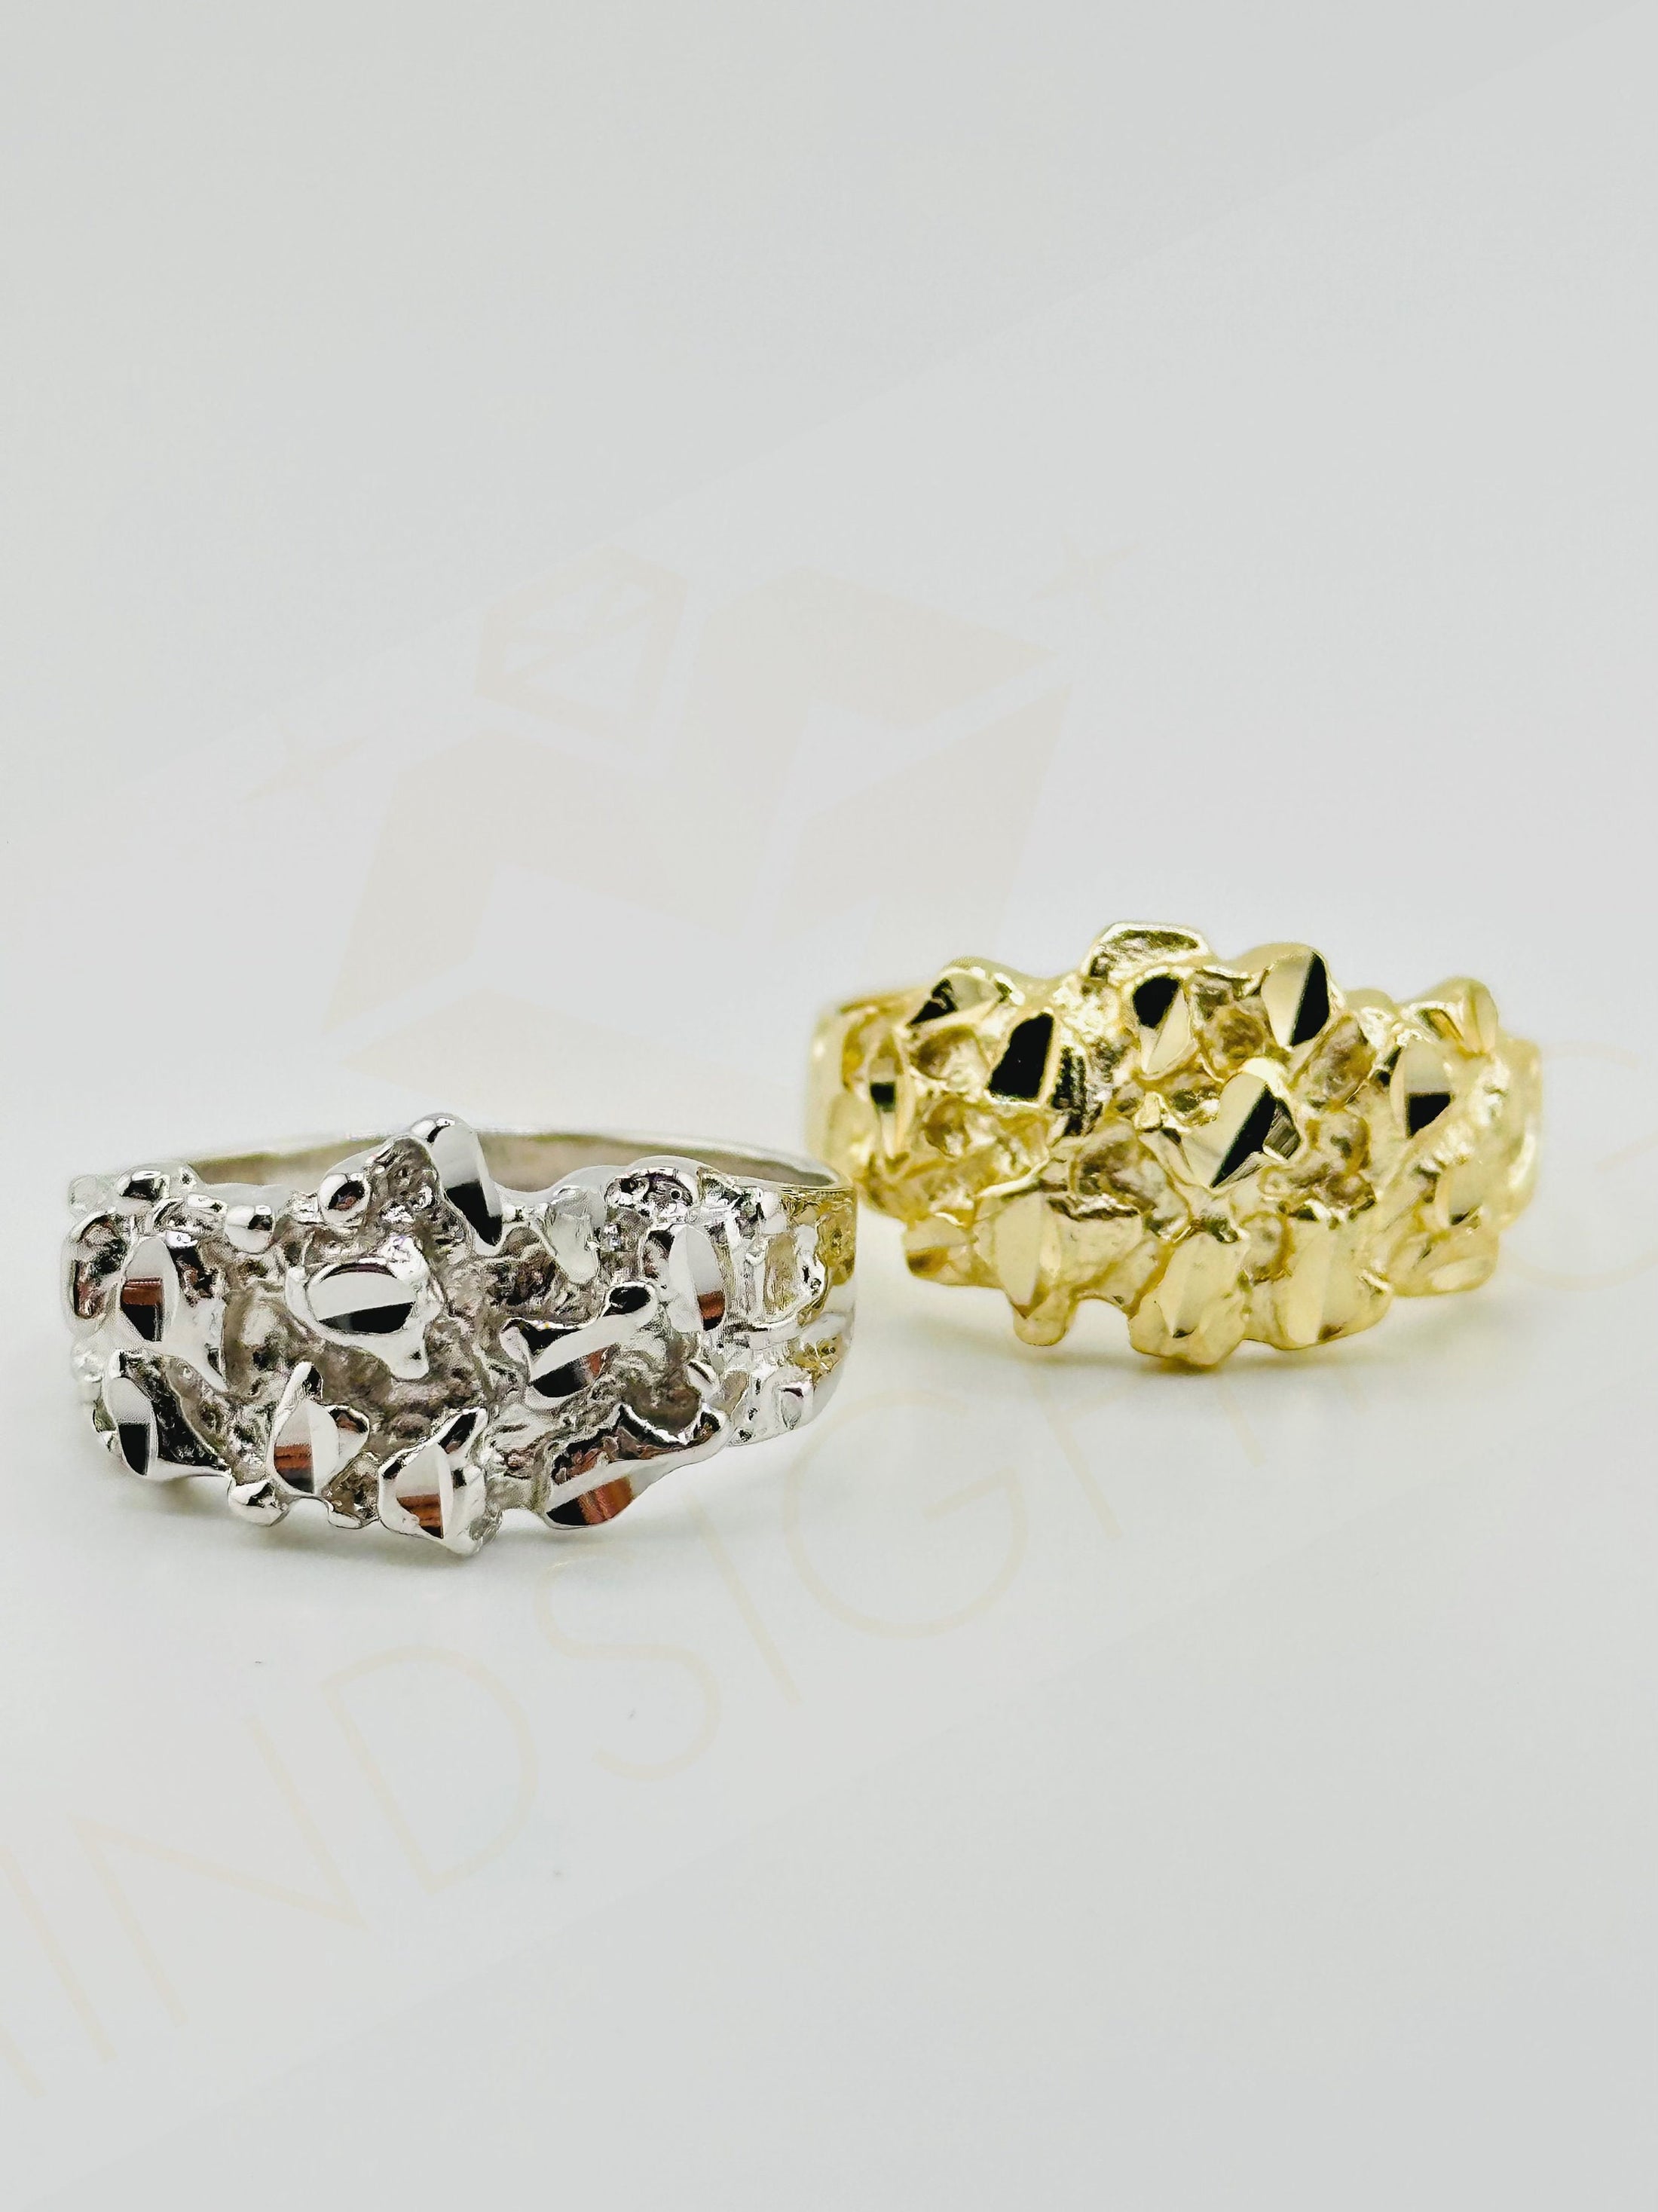 10k Gold Vermeil Classic Big Nugget Ring For Men / Classic Nugget Ring / Engagement Band Ring / Mens Ring / Gift for Men Boy / Gift for him